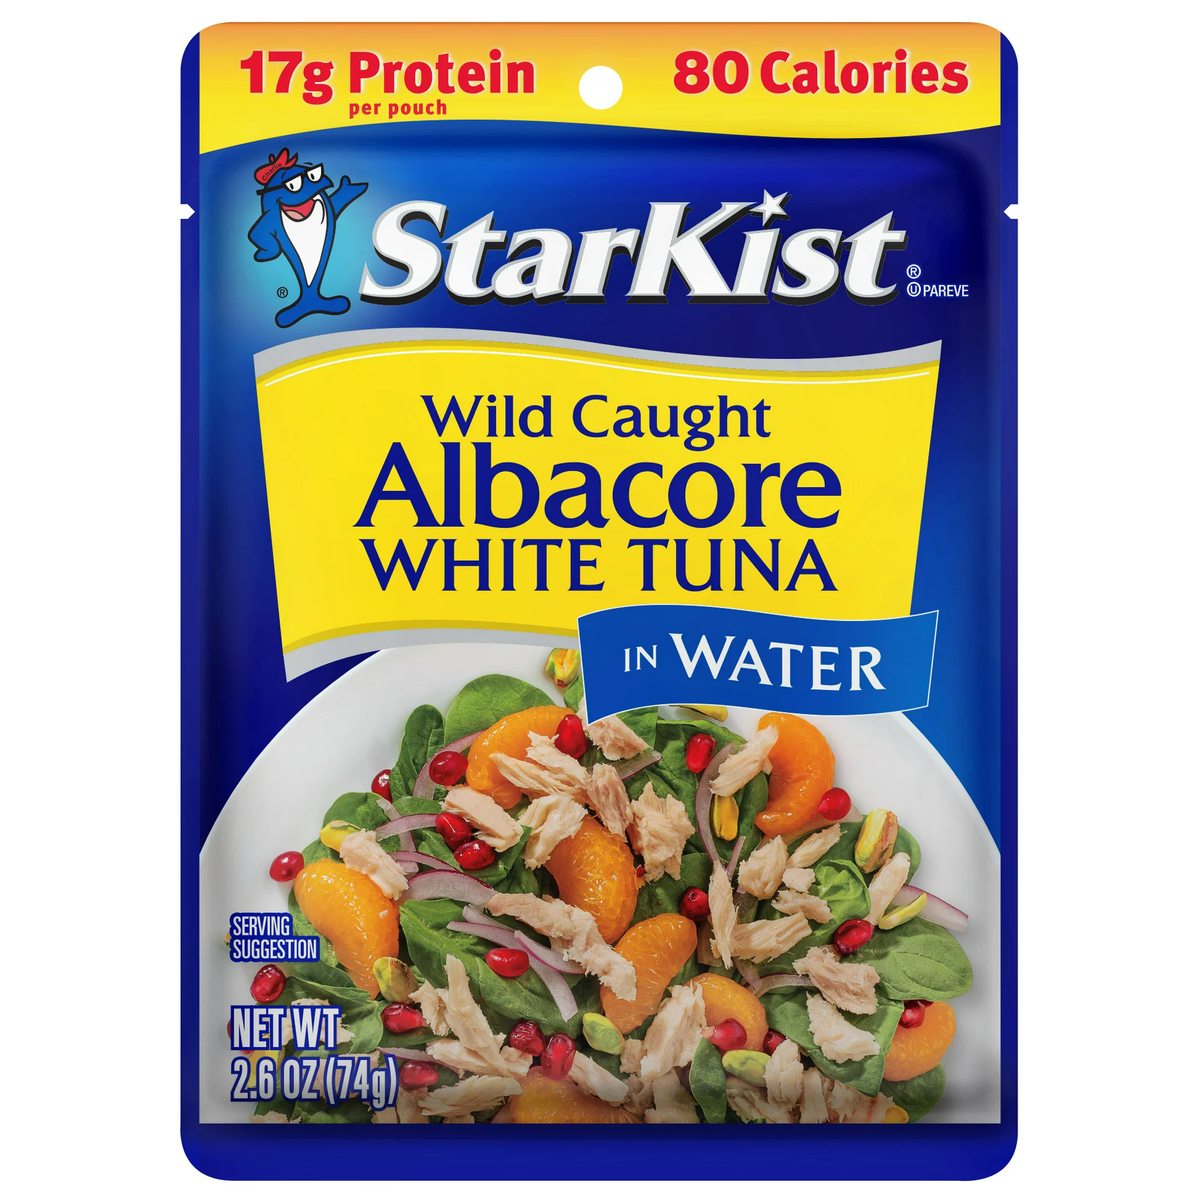 Starkist Wild Caught Albacore White Tuna in Water 74 g